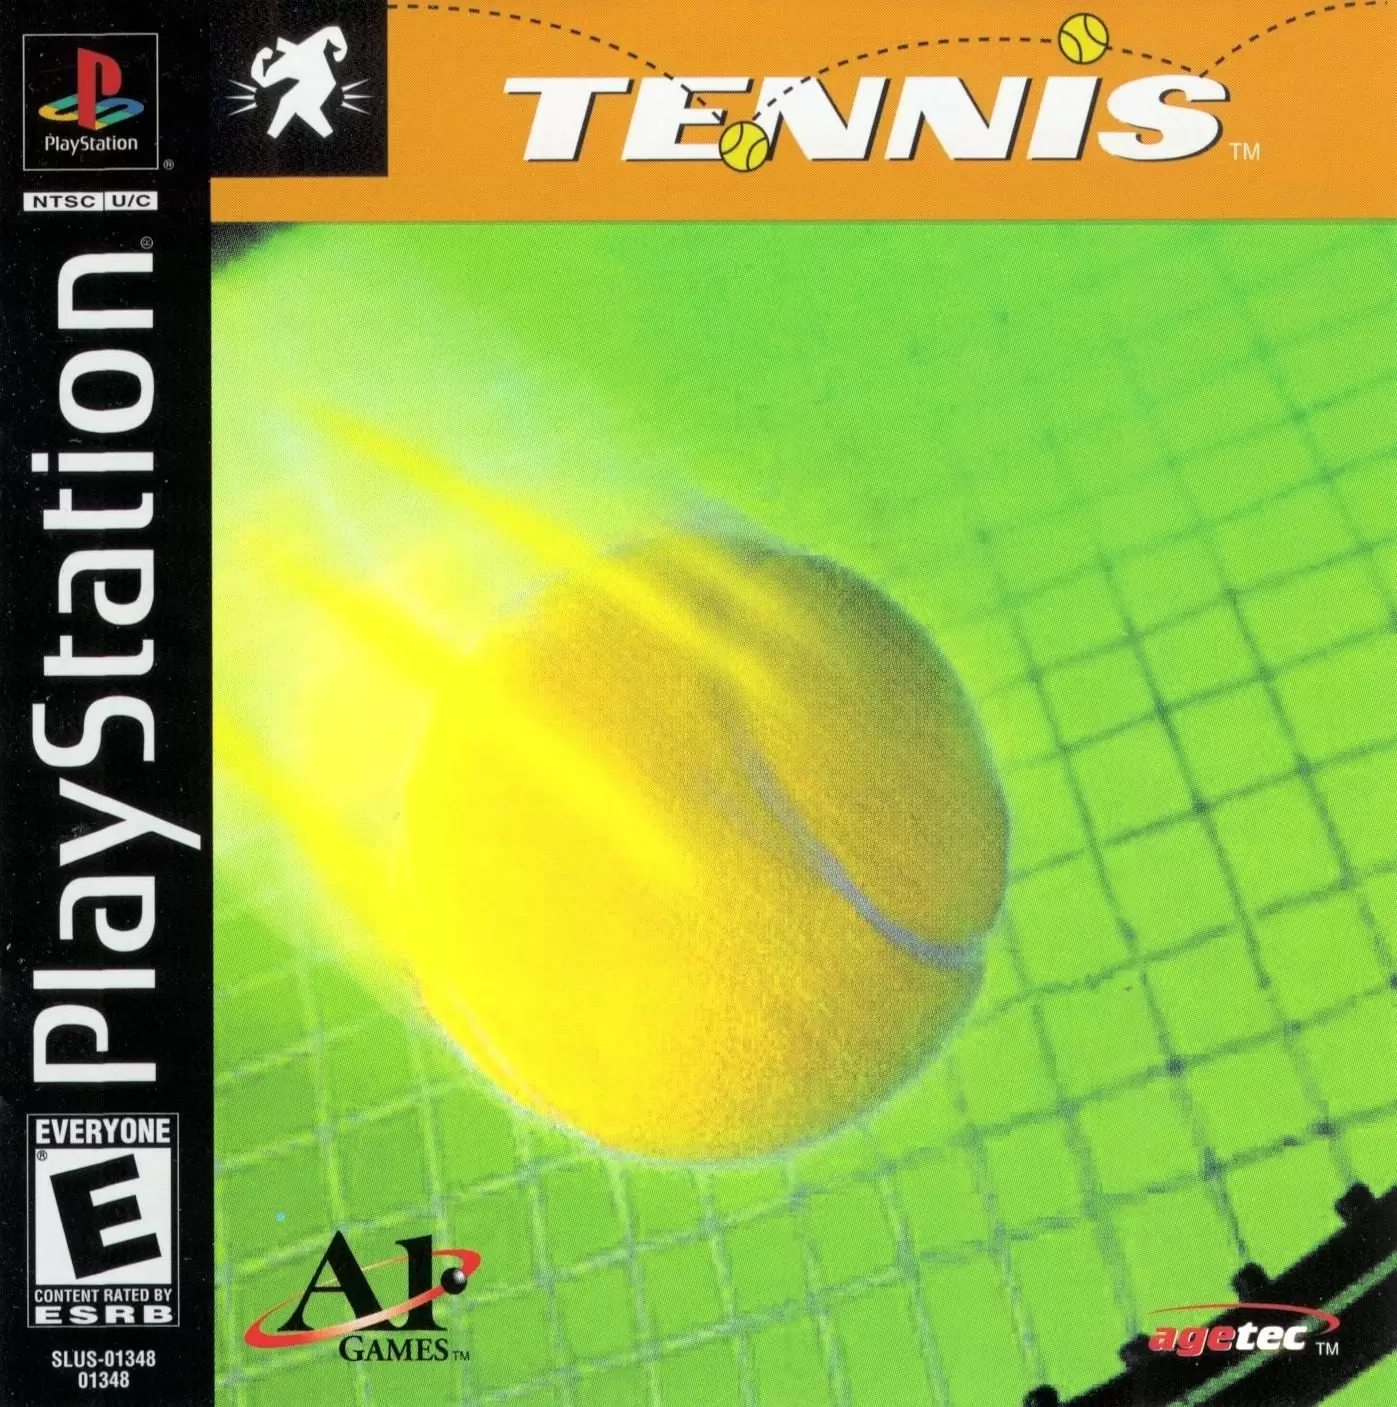 Playstation games - Tennis